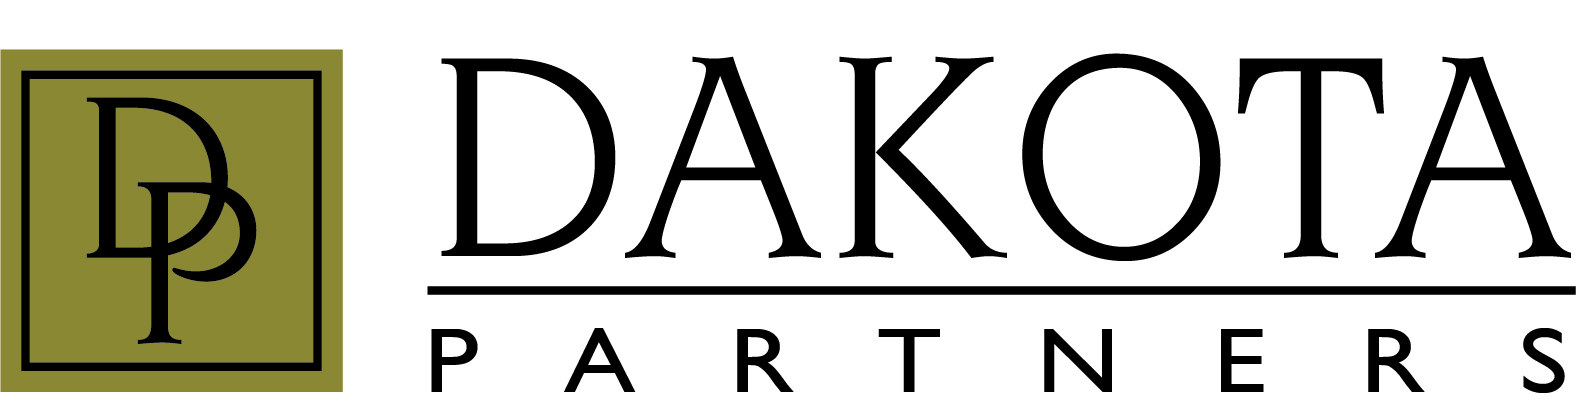 Dakota Partners company logo